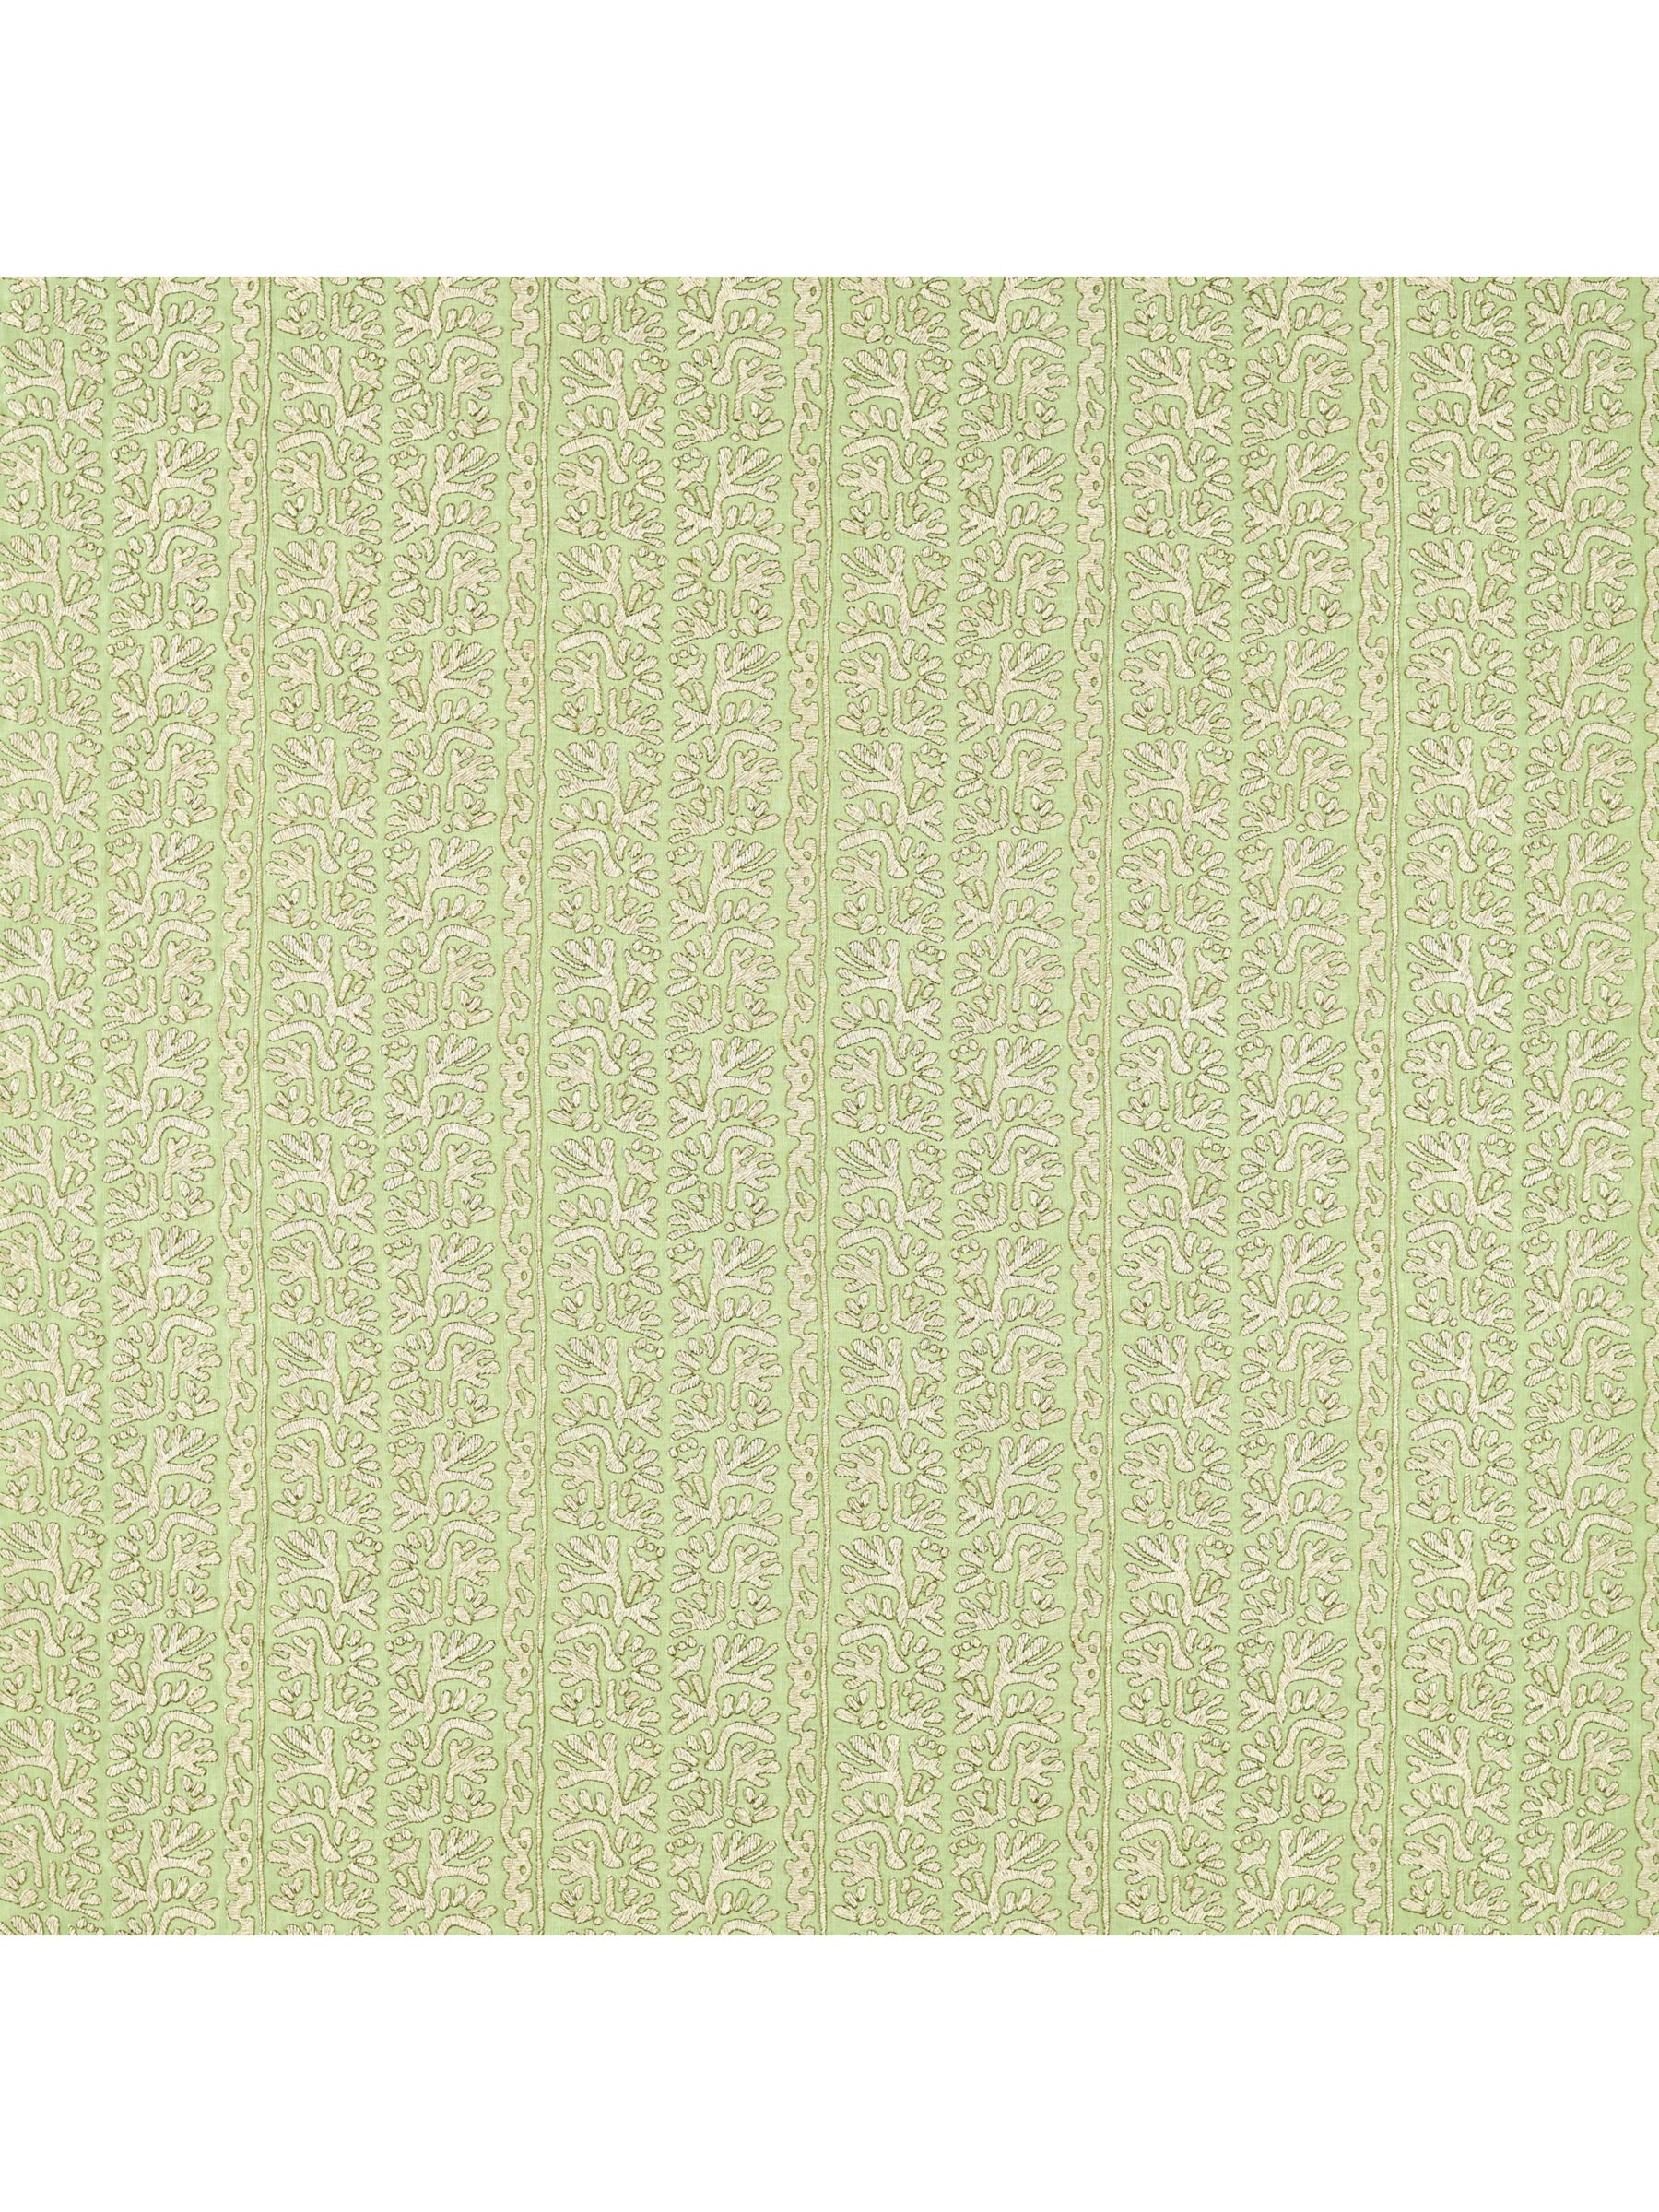 Harlequin Khorol Furnishing Fabric, Sage/Shiitake